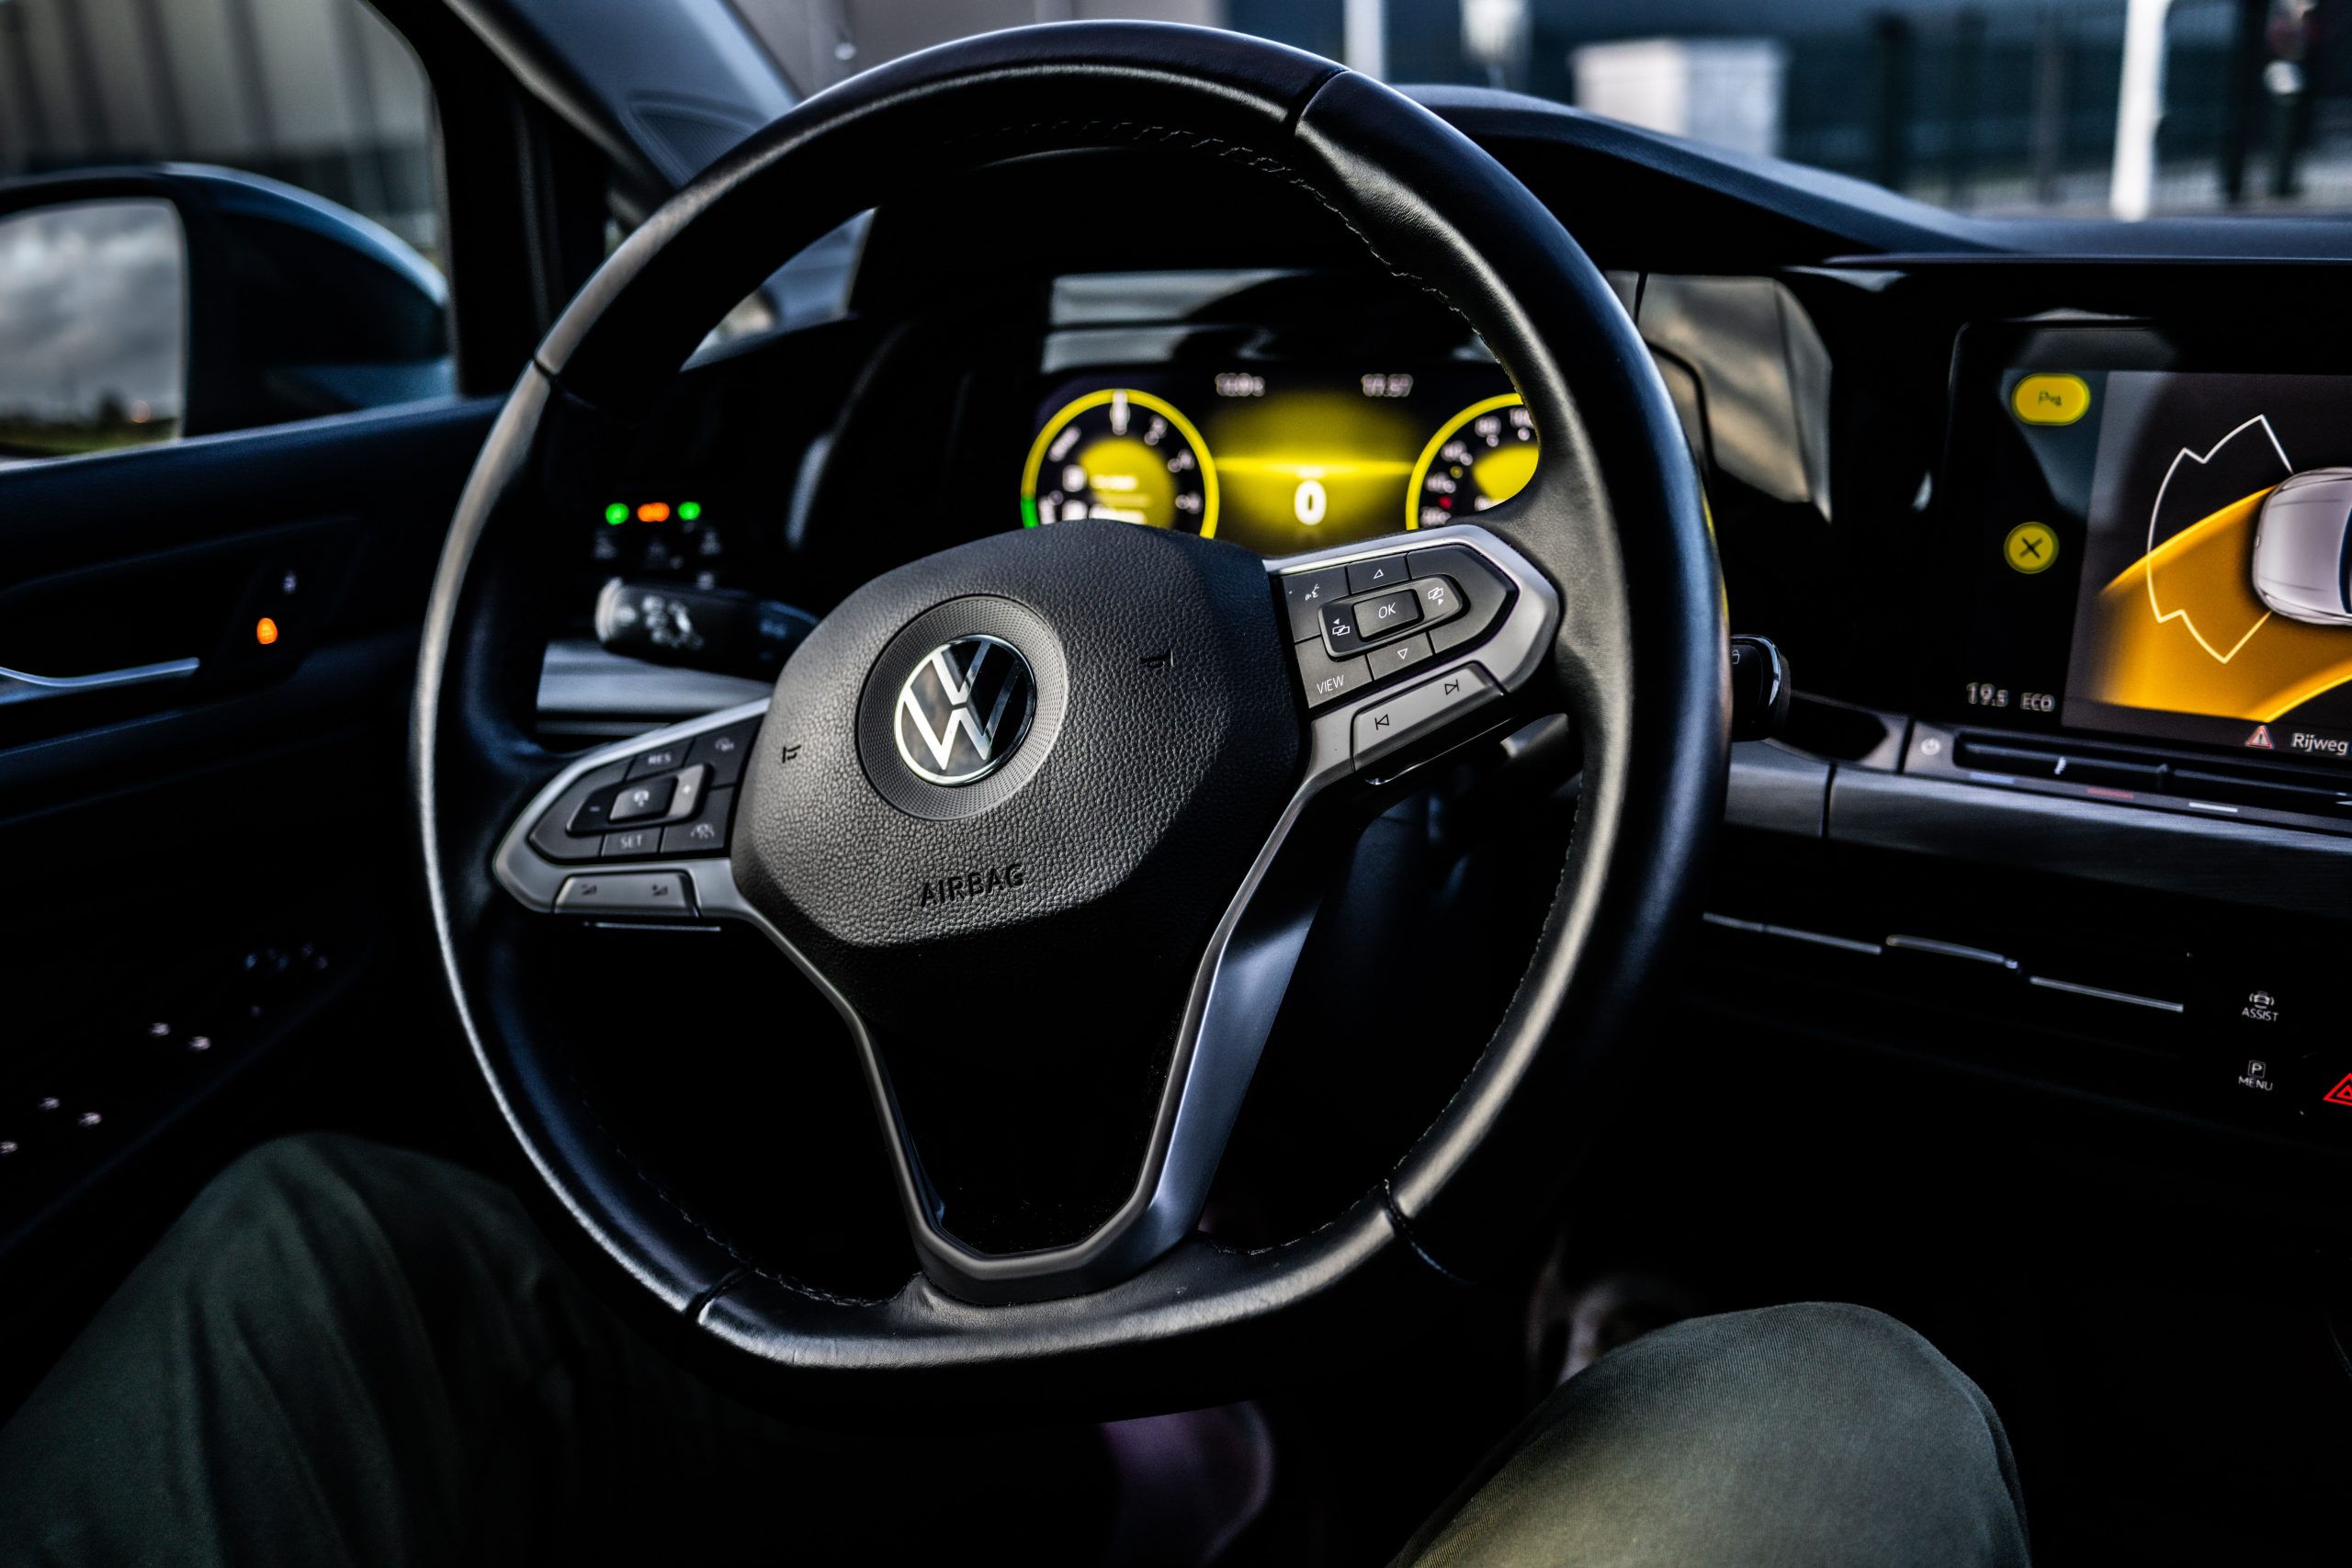 Volkswagen Transporter Driving, Engines & Performance